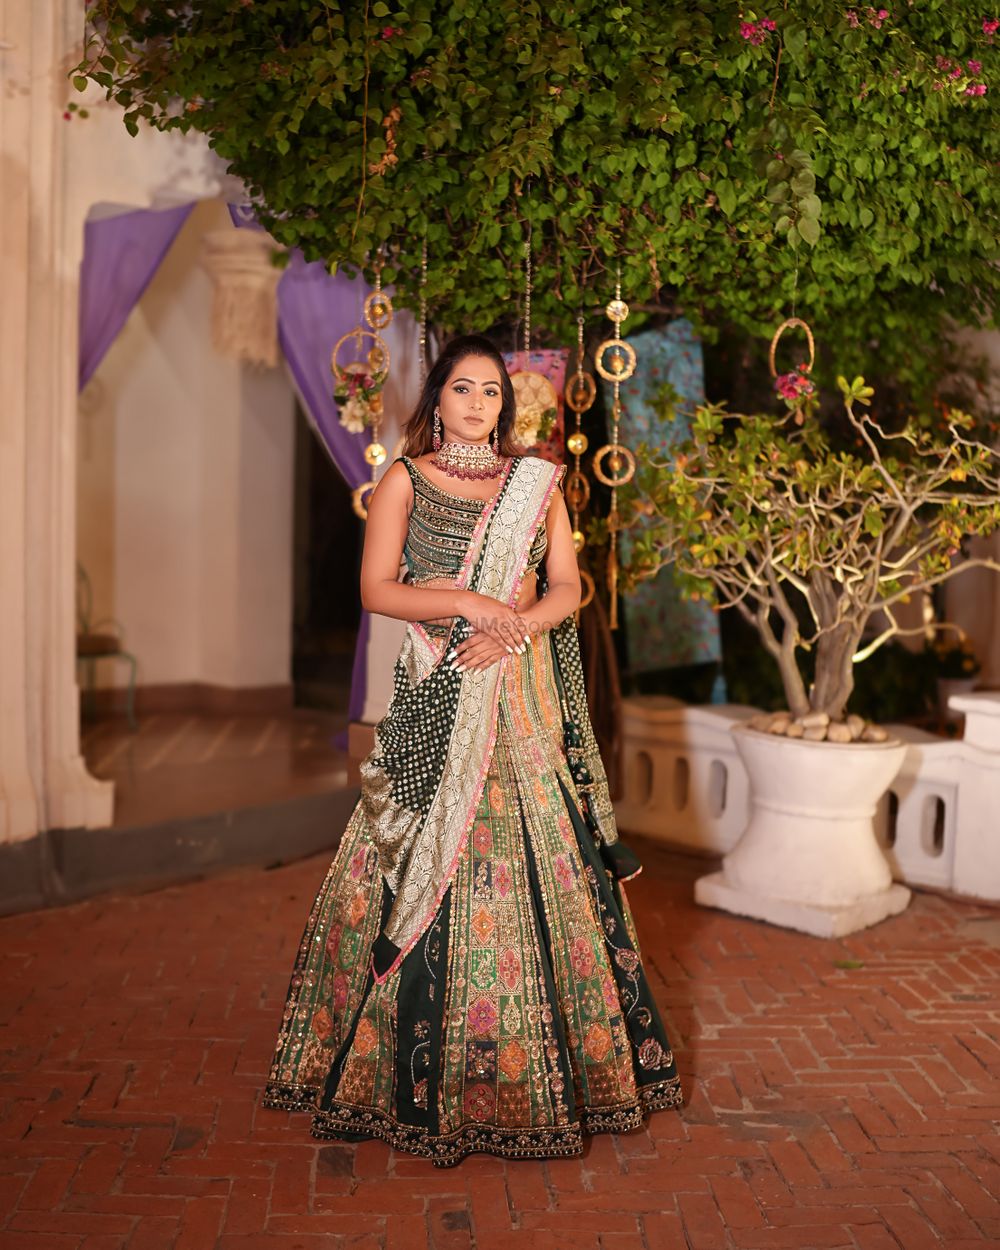 Photo From Meghana’s Wedding Looks - By Geetika Mudgal